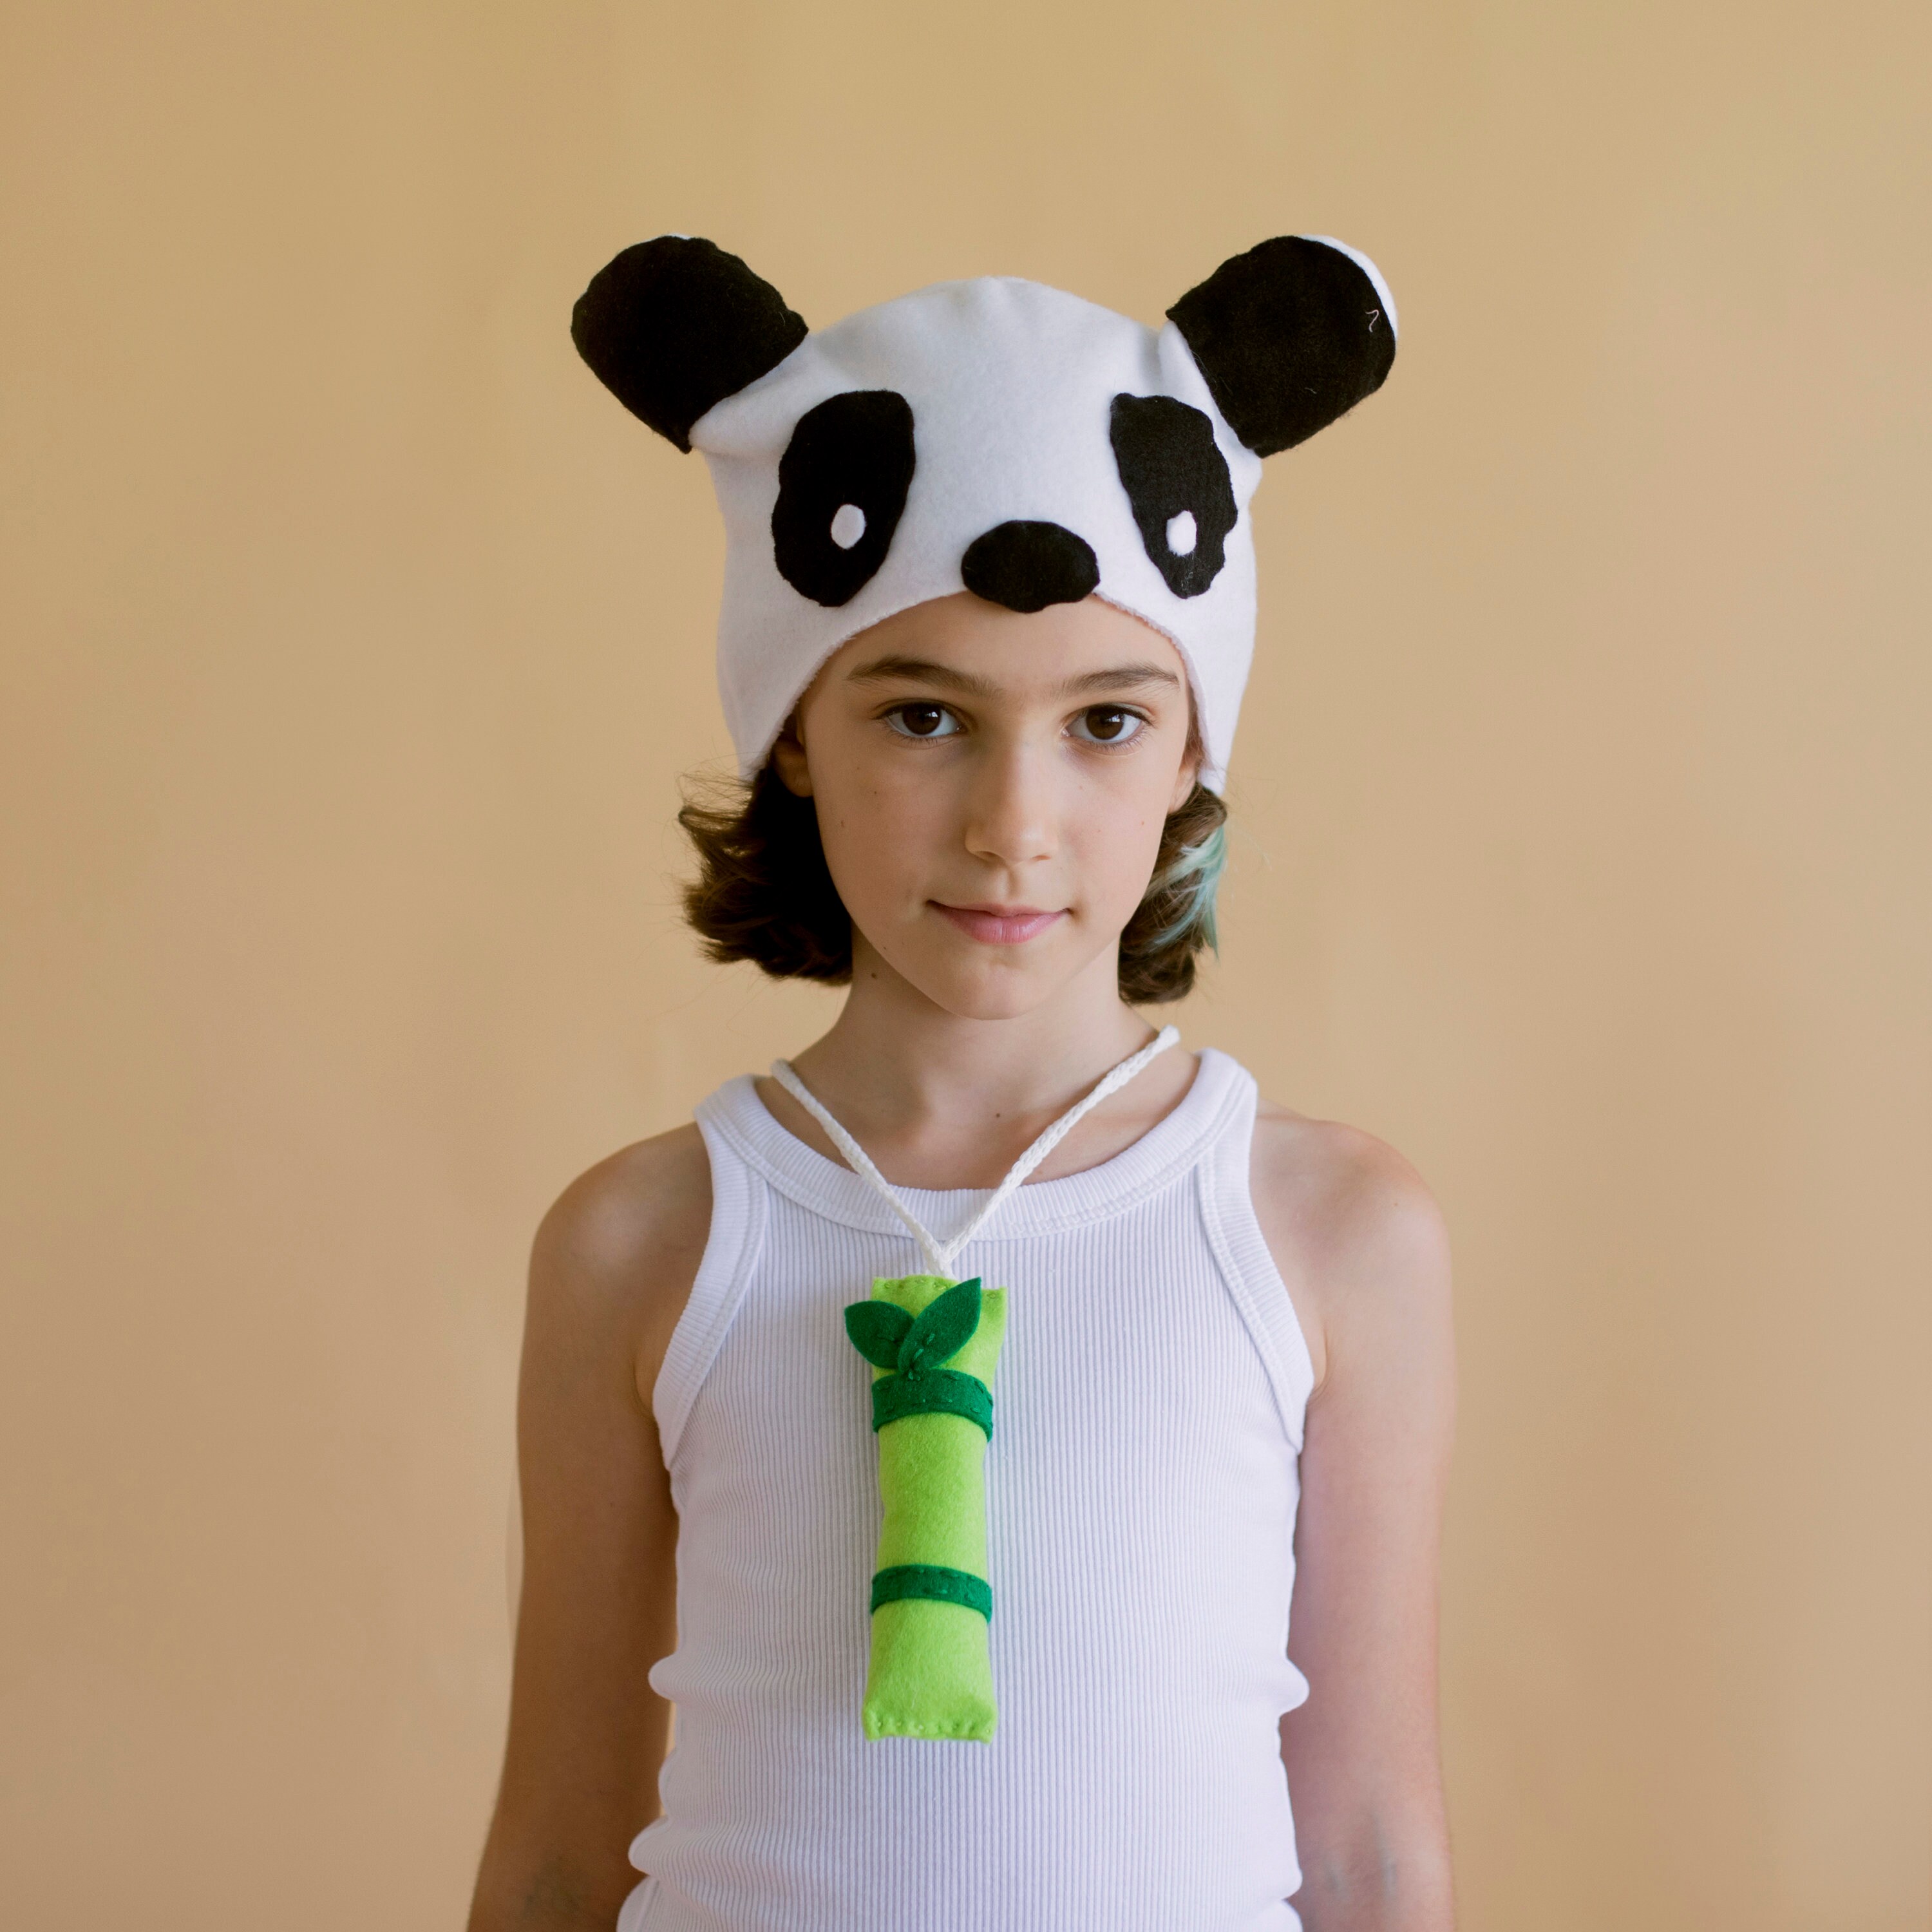 Kid's Panda Kostuum DIY Kit - Nederland